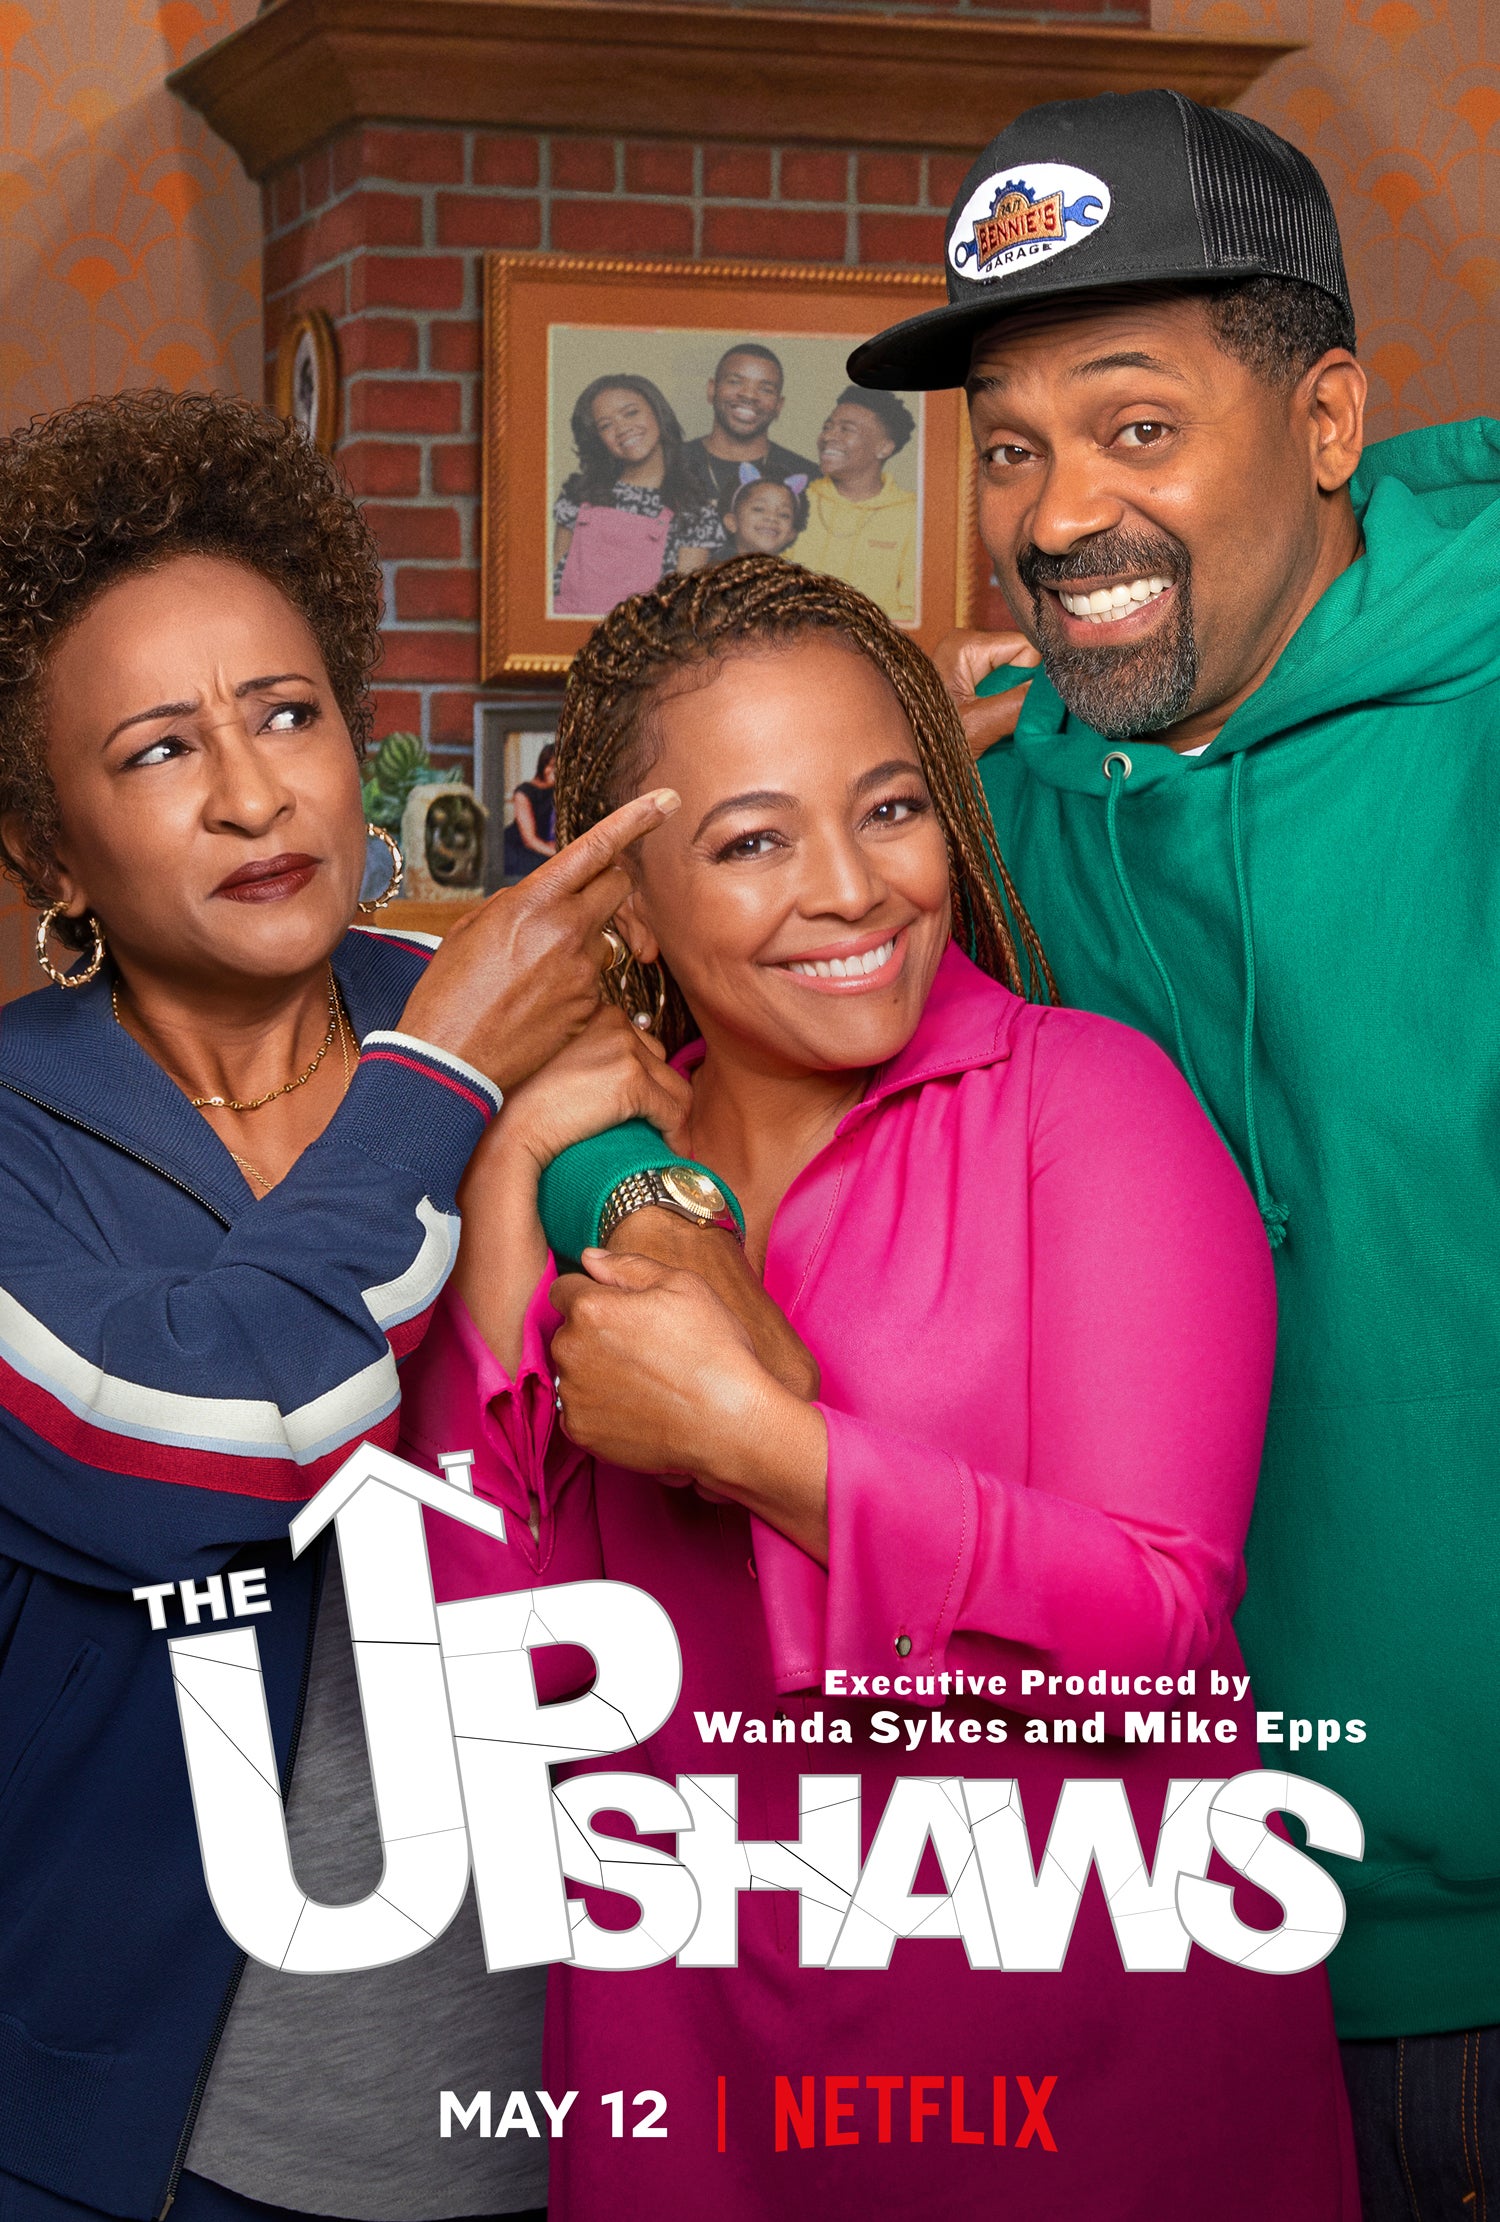 First Look At Netflix’s Newest Black Sitcom: ‘The Upshaws’